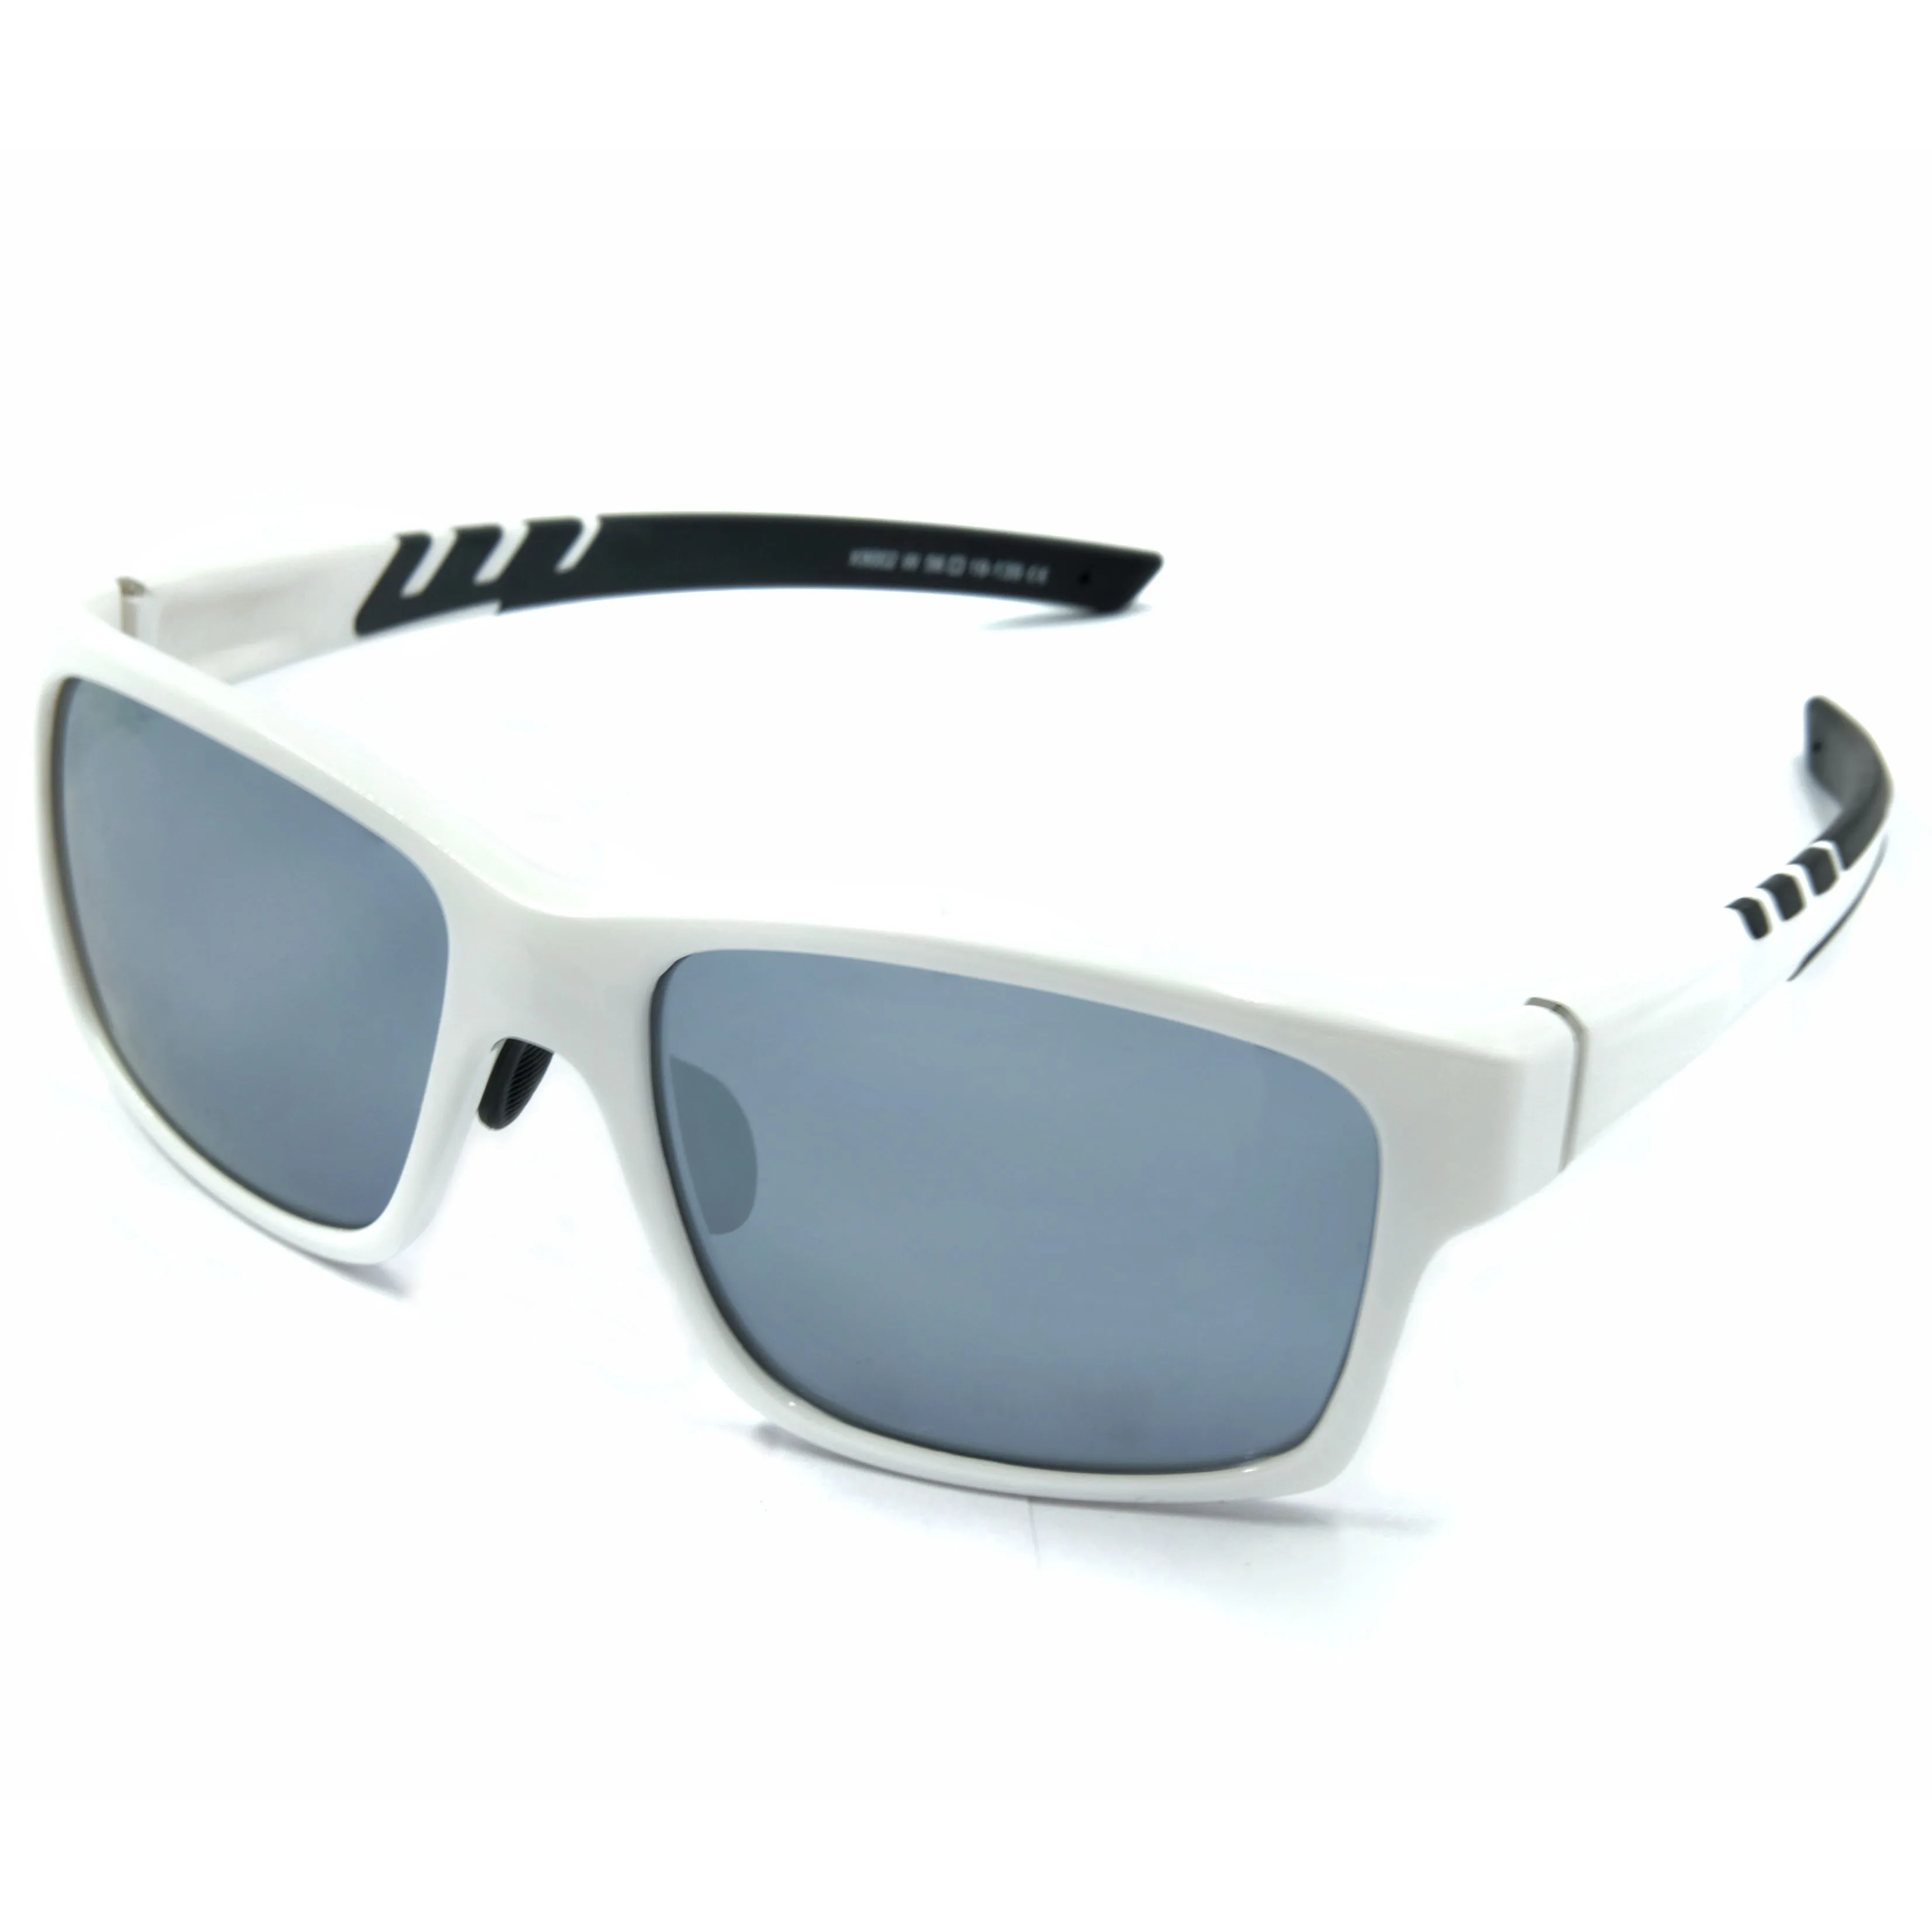 

White TR90 Sun glasses river contact lenses polarized ray bans men sports sunglasses 2021 women shades fishing riding Hiking